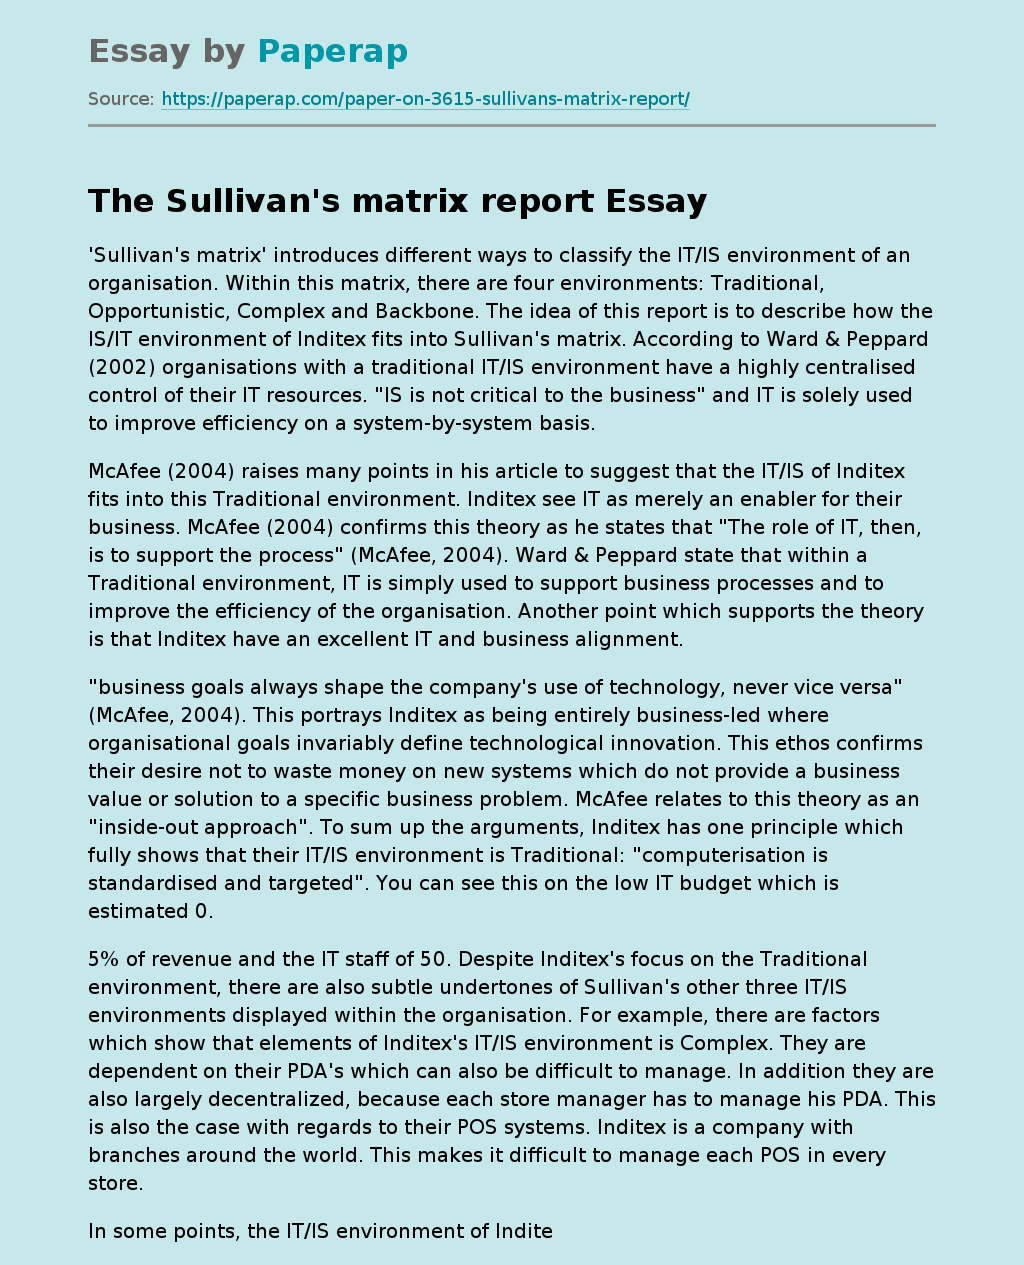 The Sullivan's Matrix Report